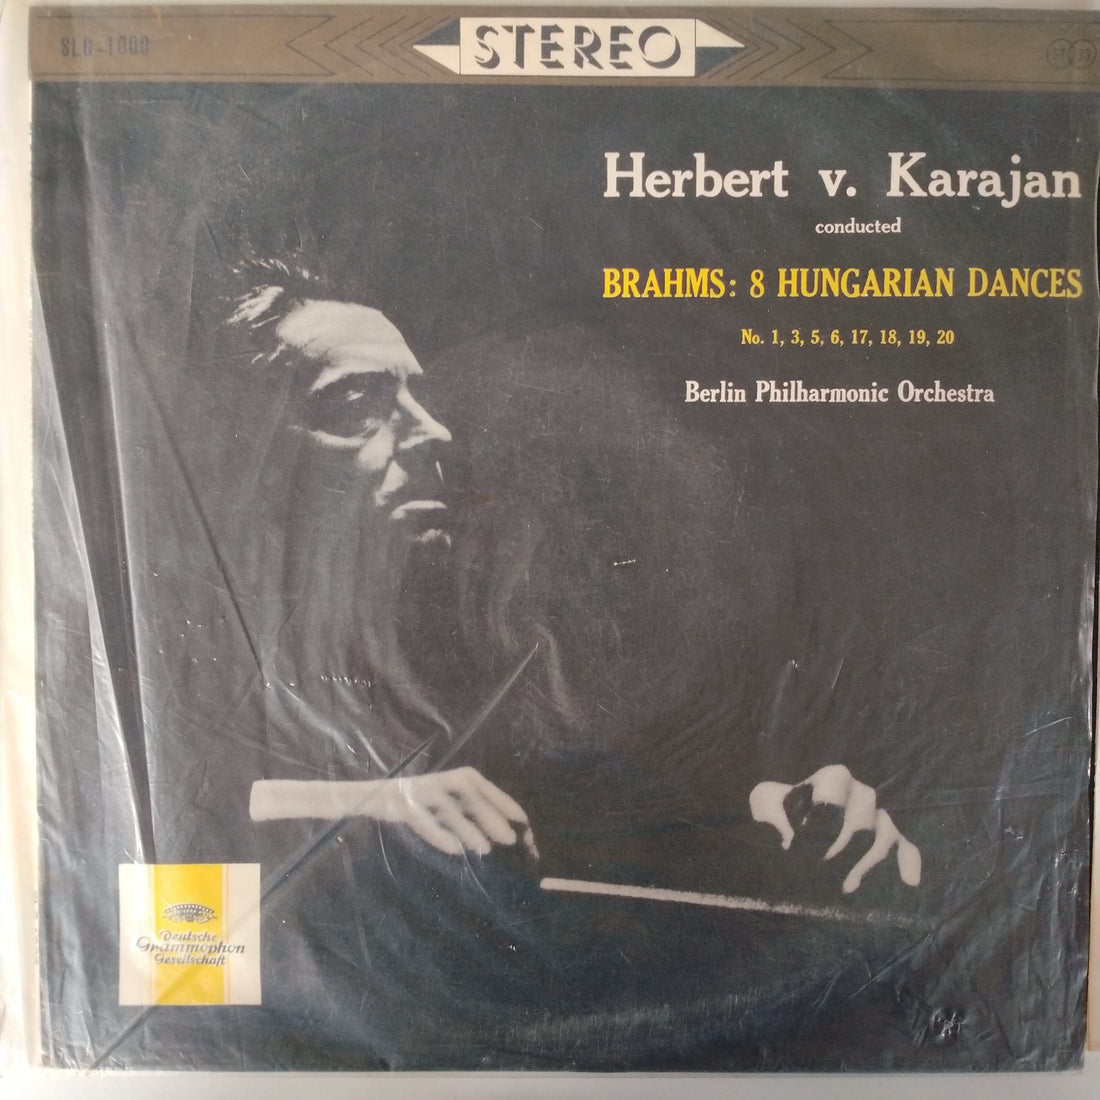 Herbert von Karajan Conducted Johannes Brahms – Berliner Philharmoniker - 8 Hungarian Dances (No. 1, 3, 5, 6, 17, 18, 19, 20) (Vinyl) (VG+)